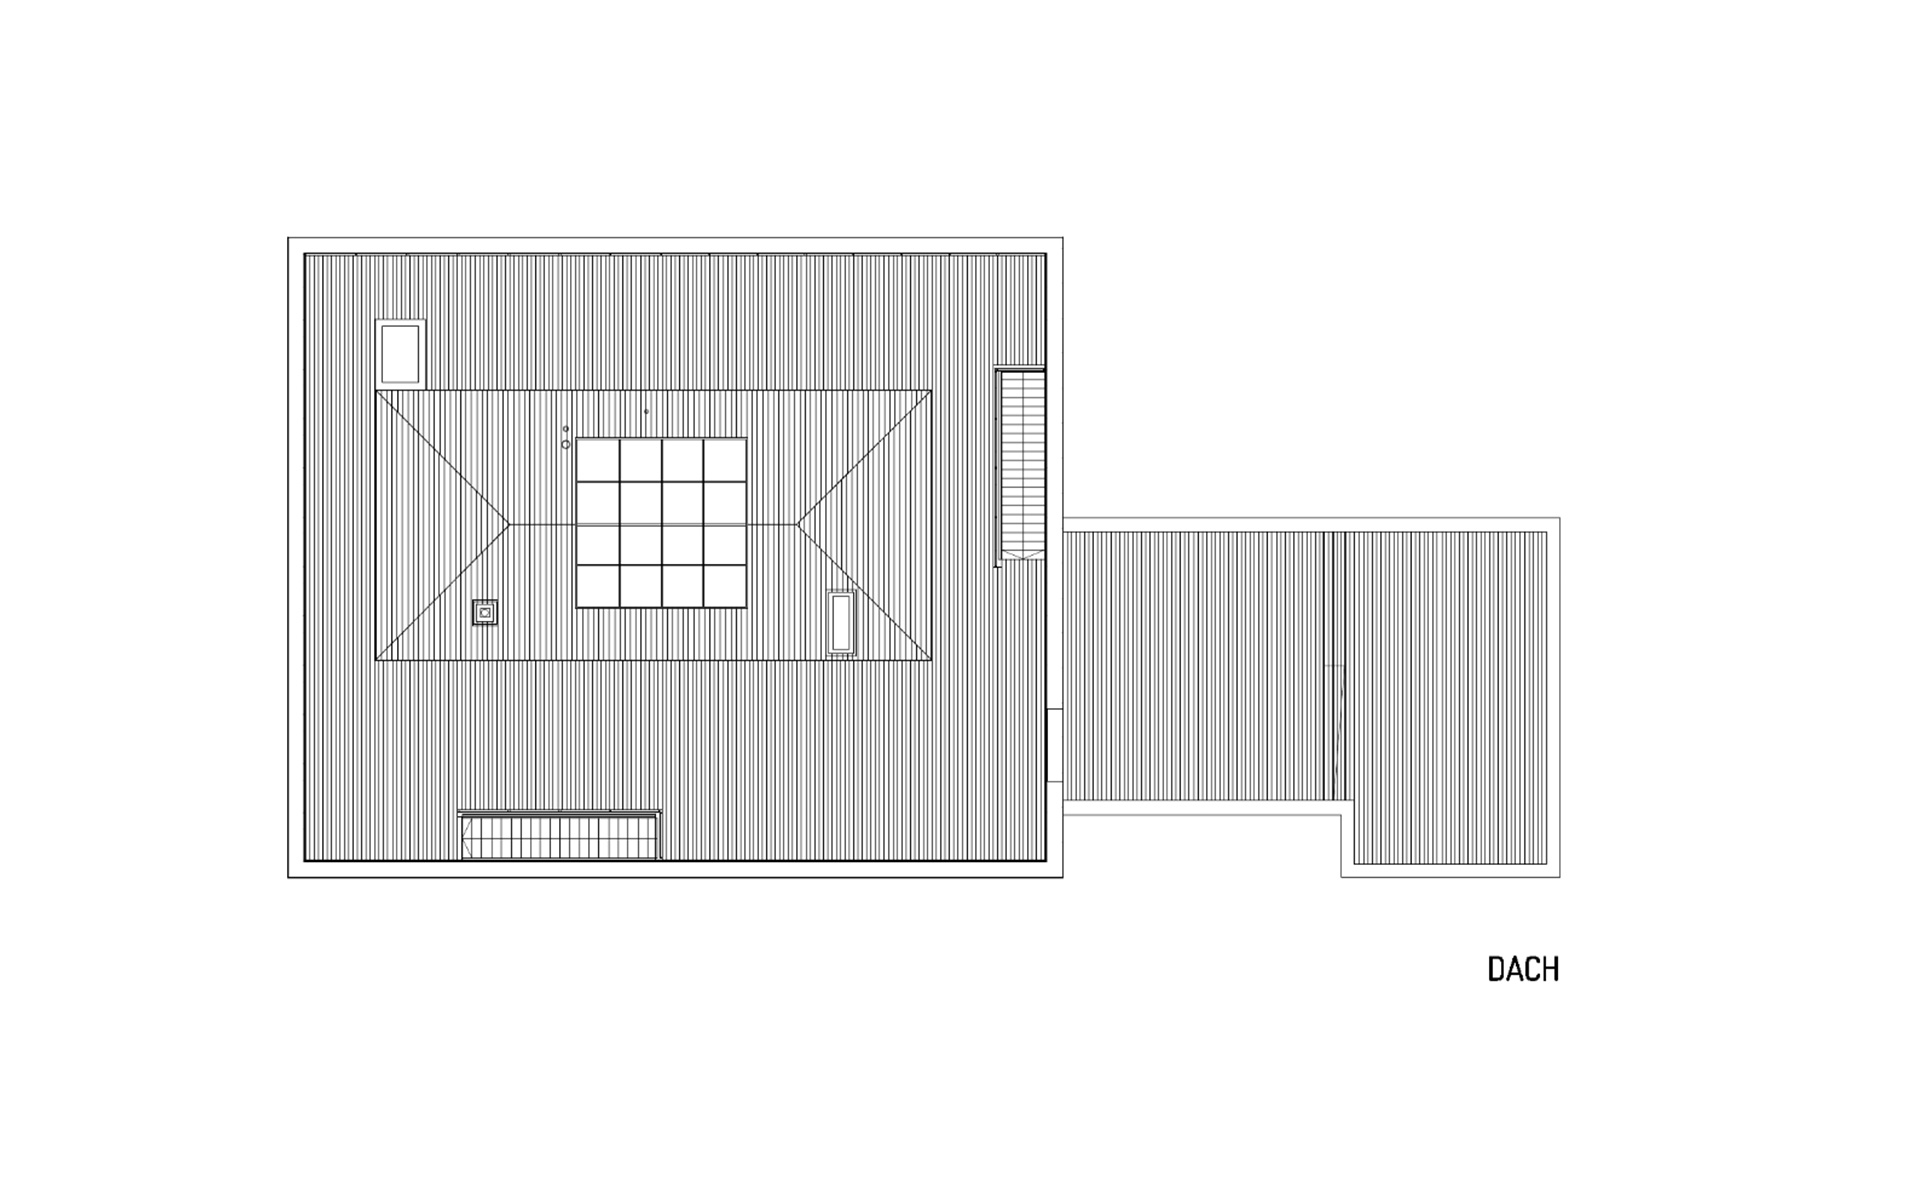 Obraz projektu dachu domu z tarasem na nim